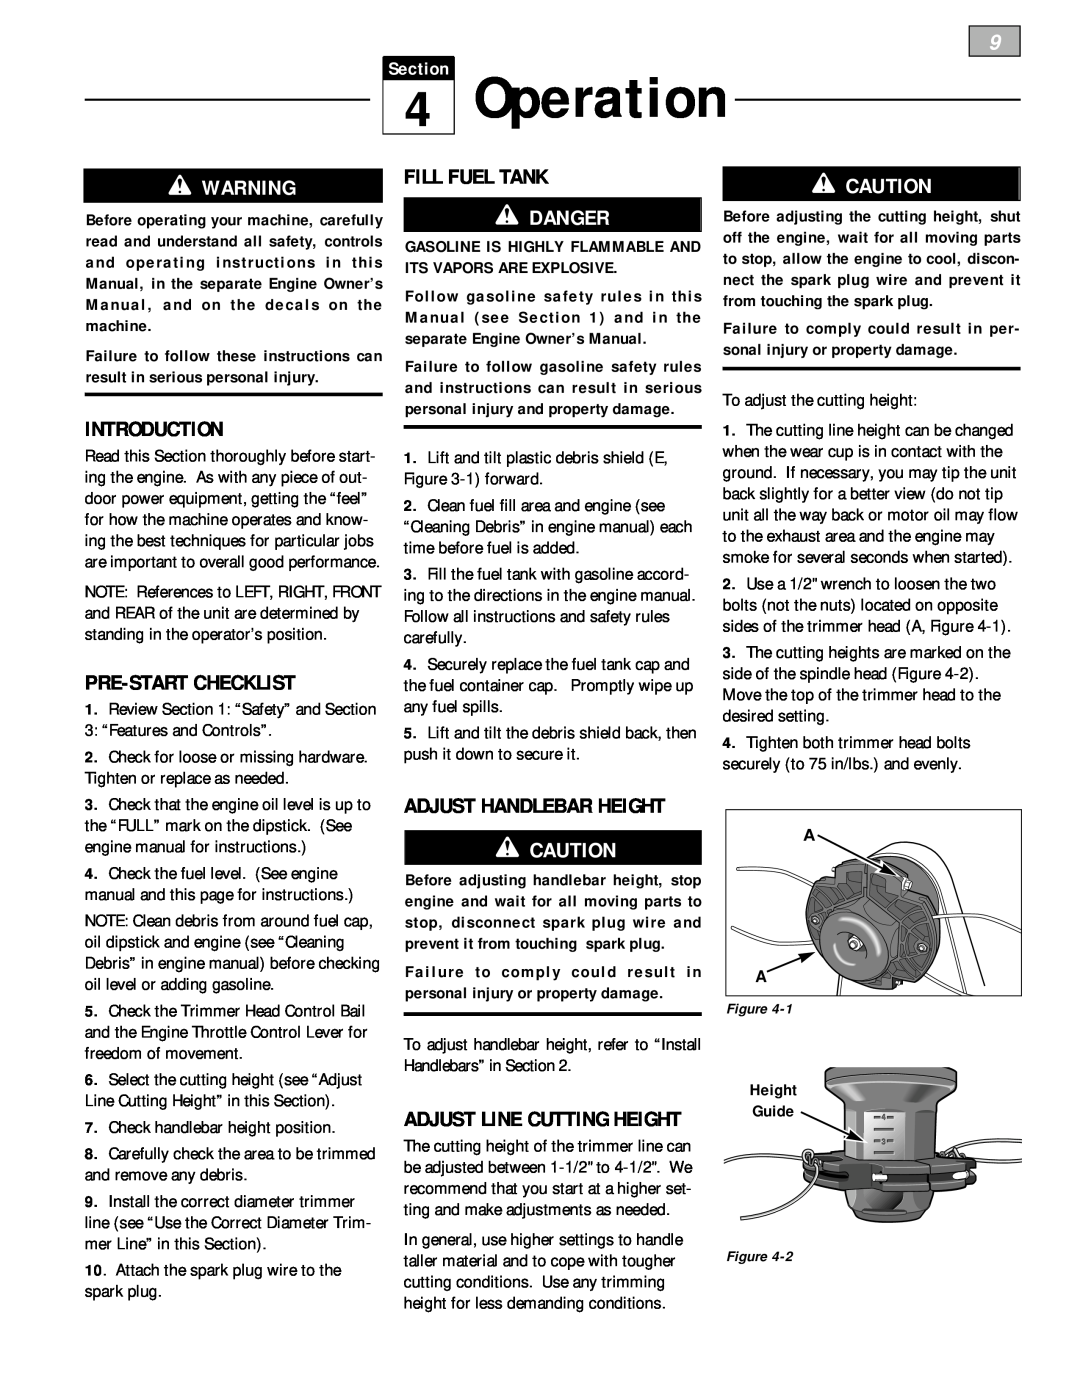 Troy-Bilt 52065 owner manual Operation, Pre-Start Checklist, Fill Fuel Tank, Adjust Handlebar Height, Danger, Introduction 